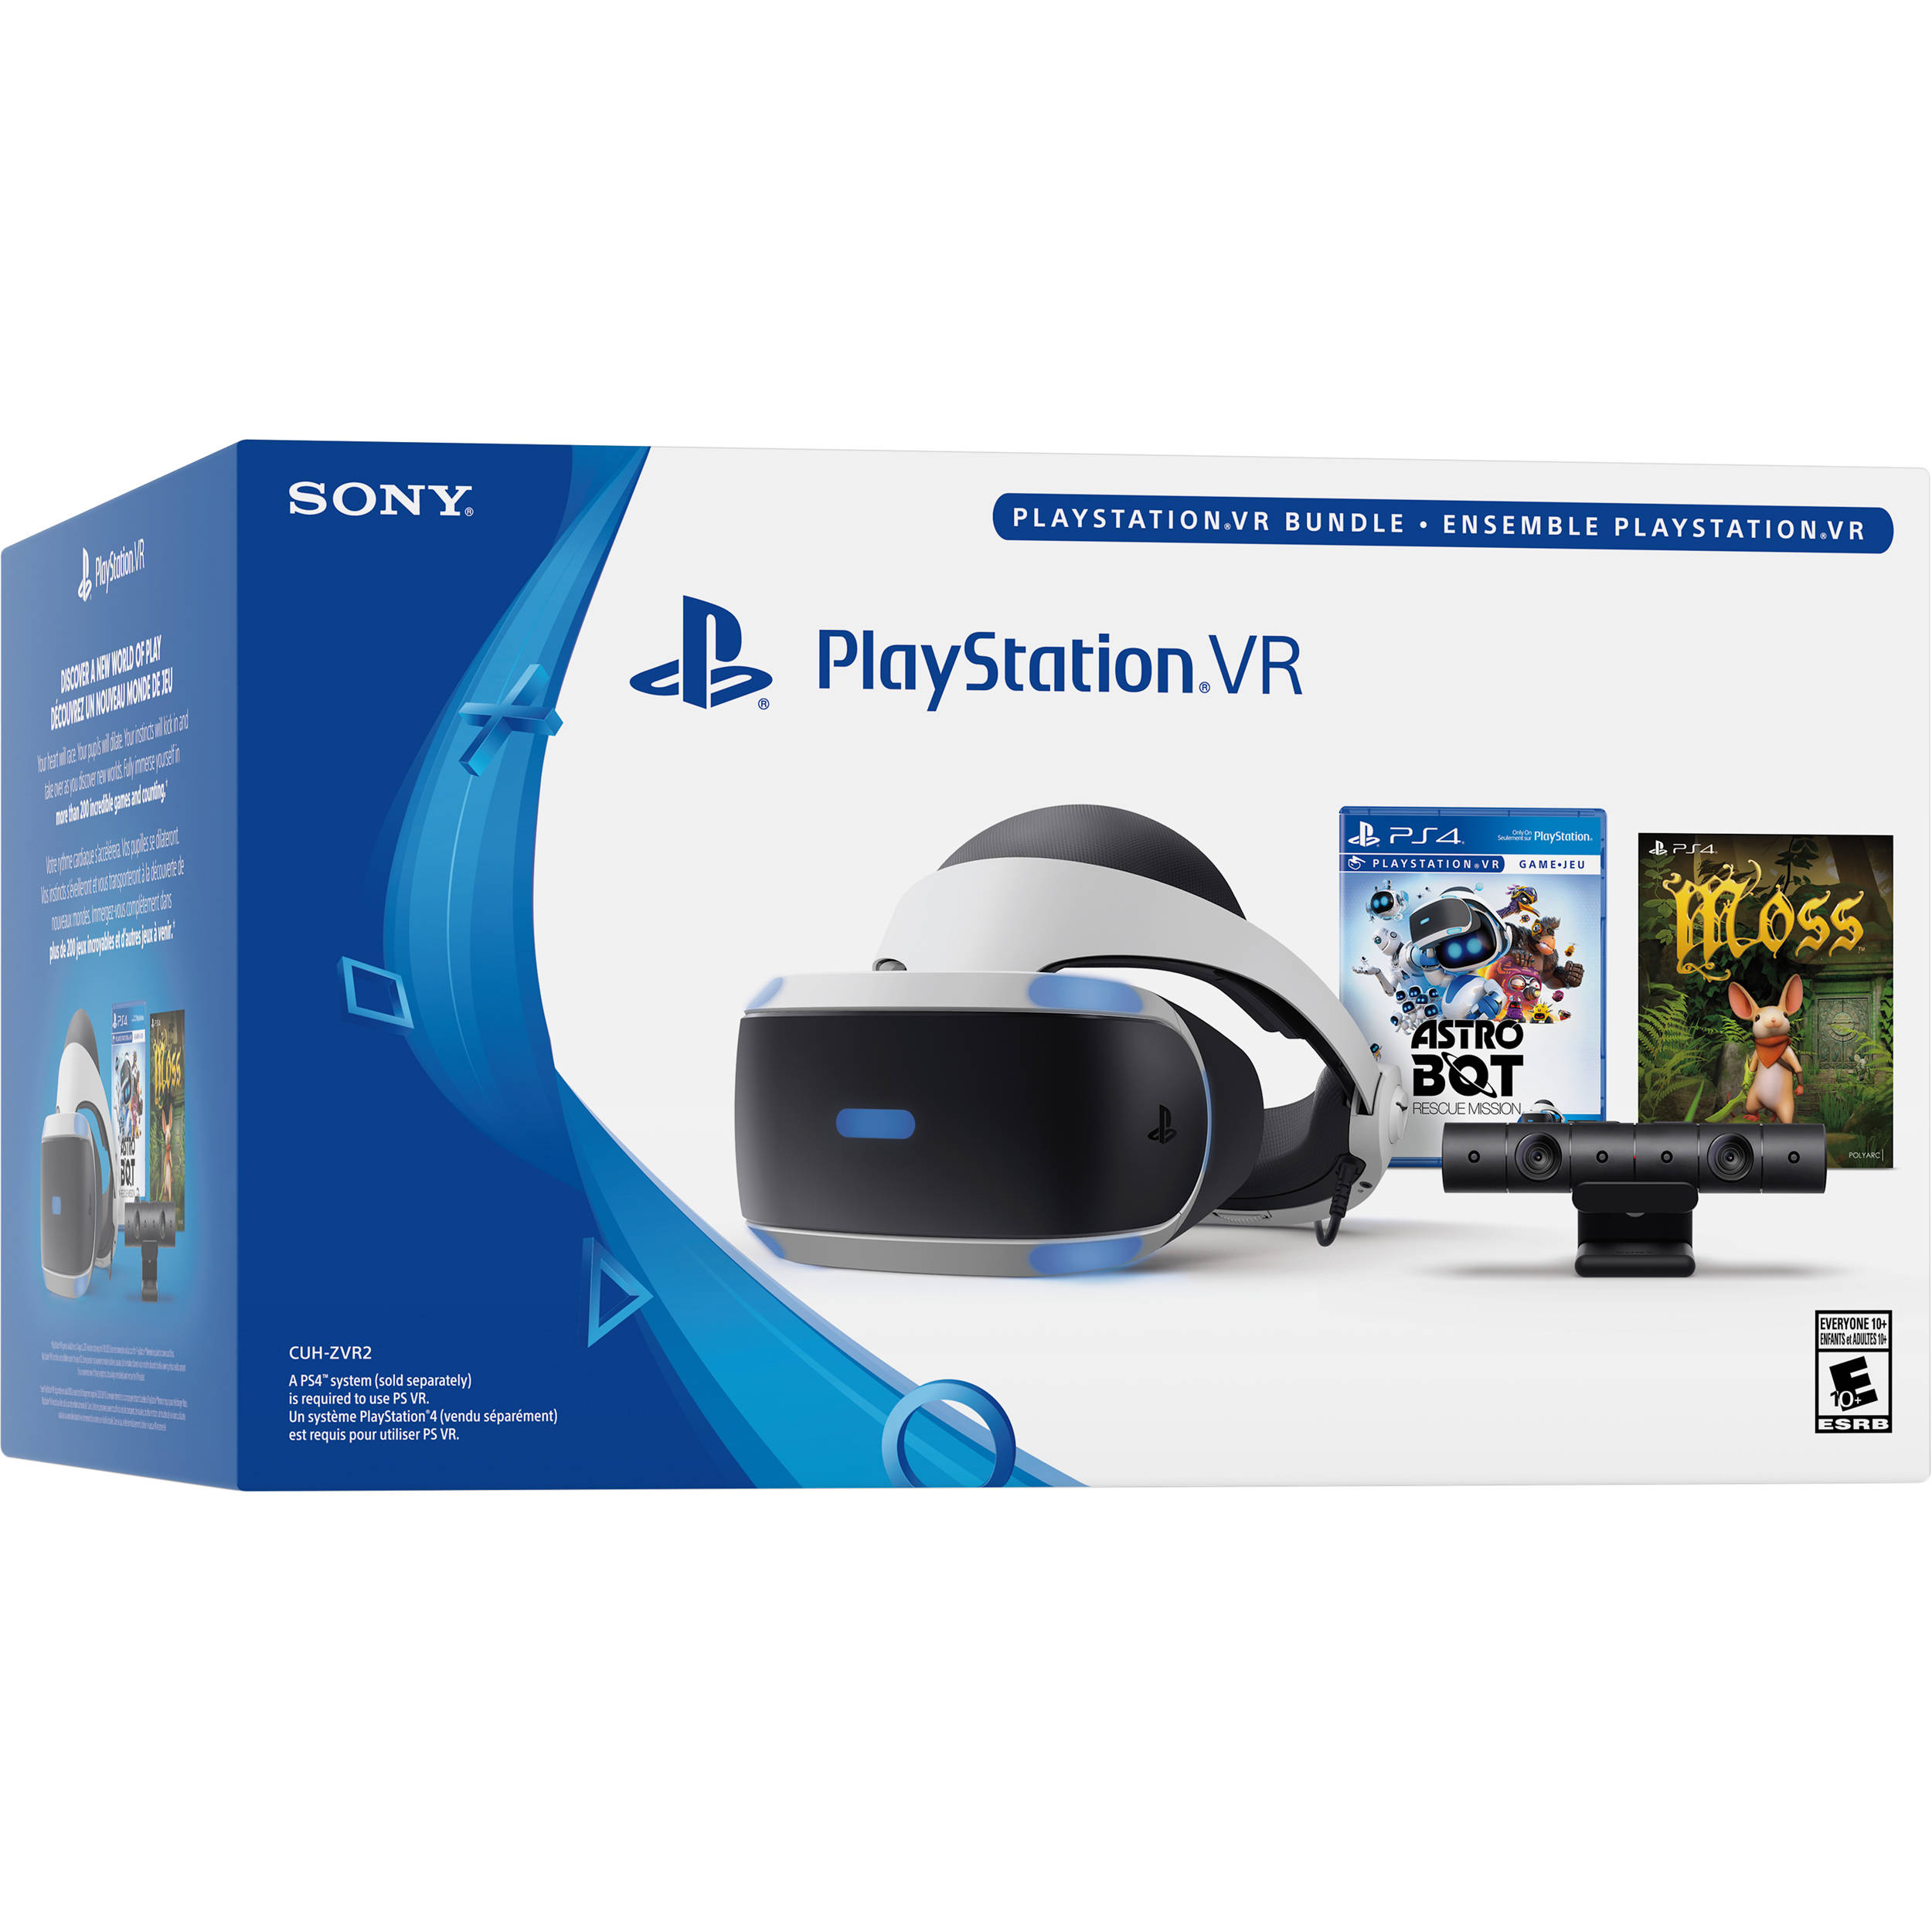 Sp vr. Sony PLAYSTATION VR v2. Sony PLAYSTATION VR CUH-zvr2. VR шлем для ps5. PS VR С Астро бот.